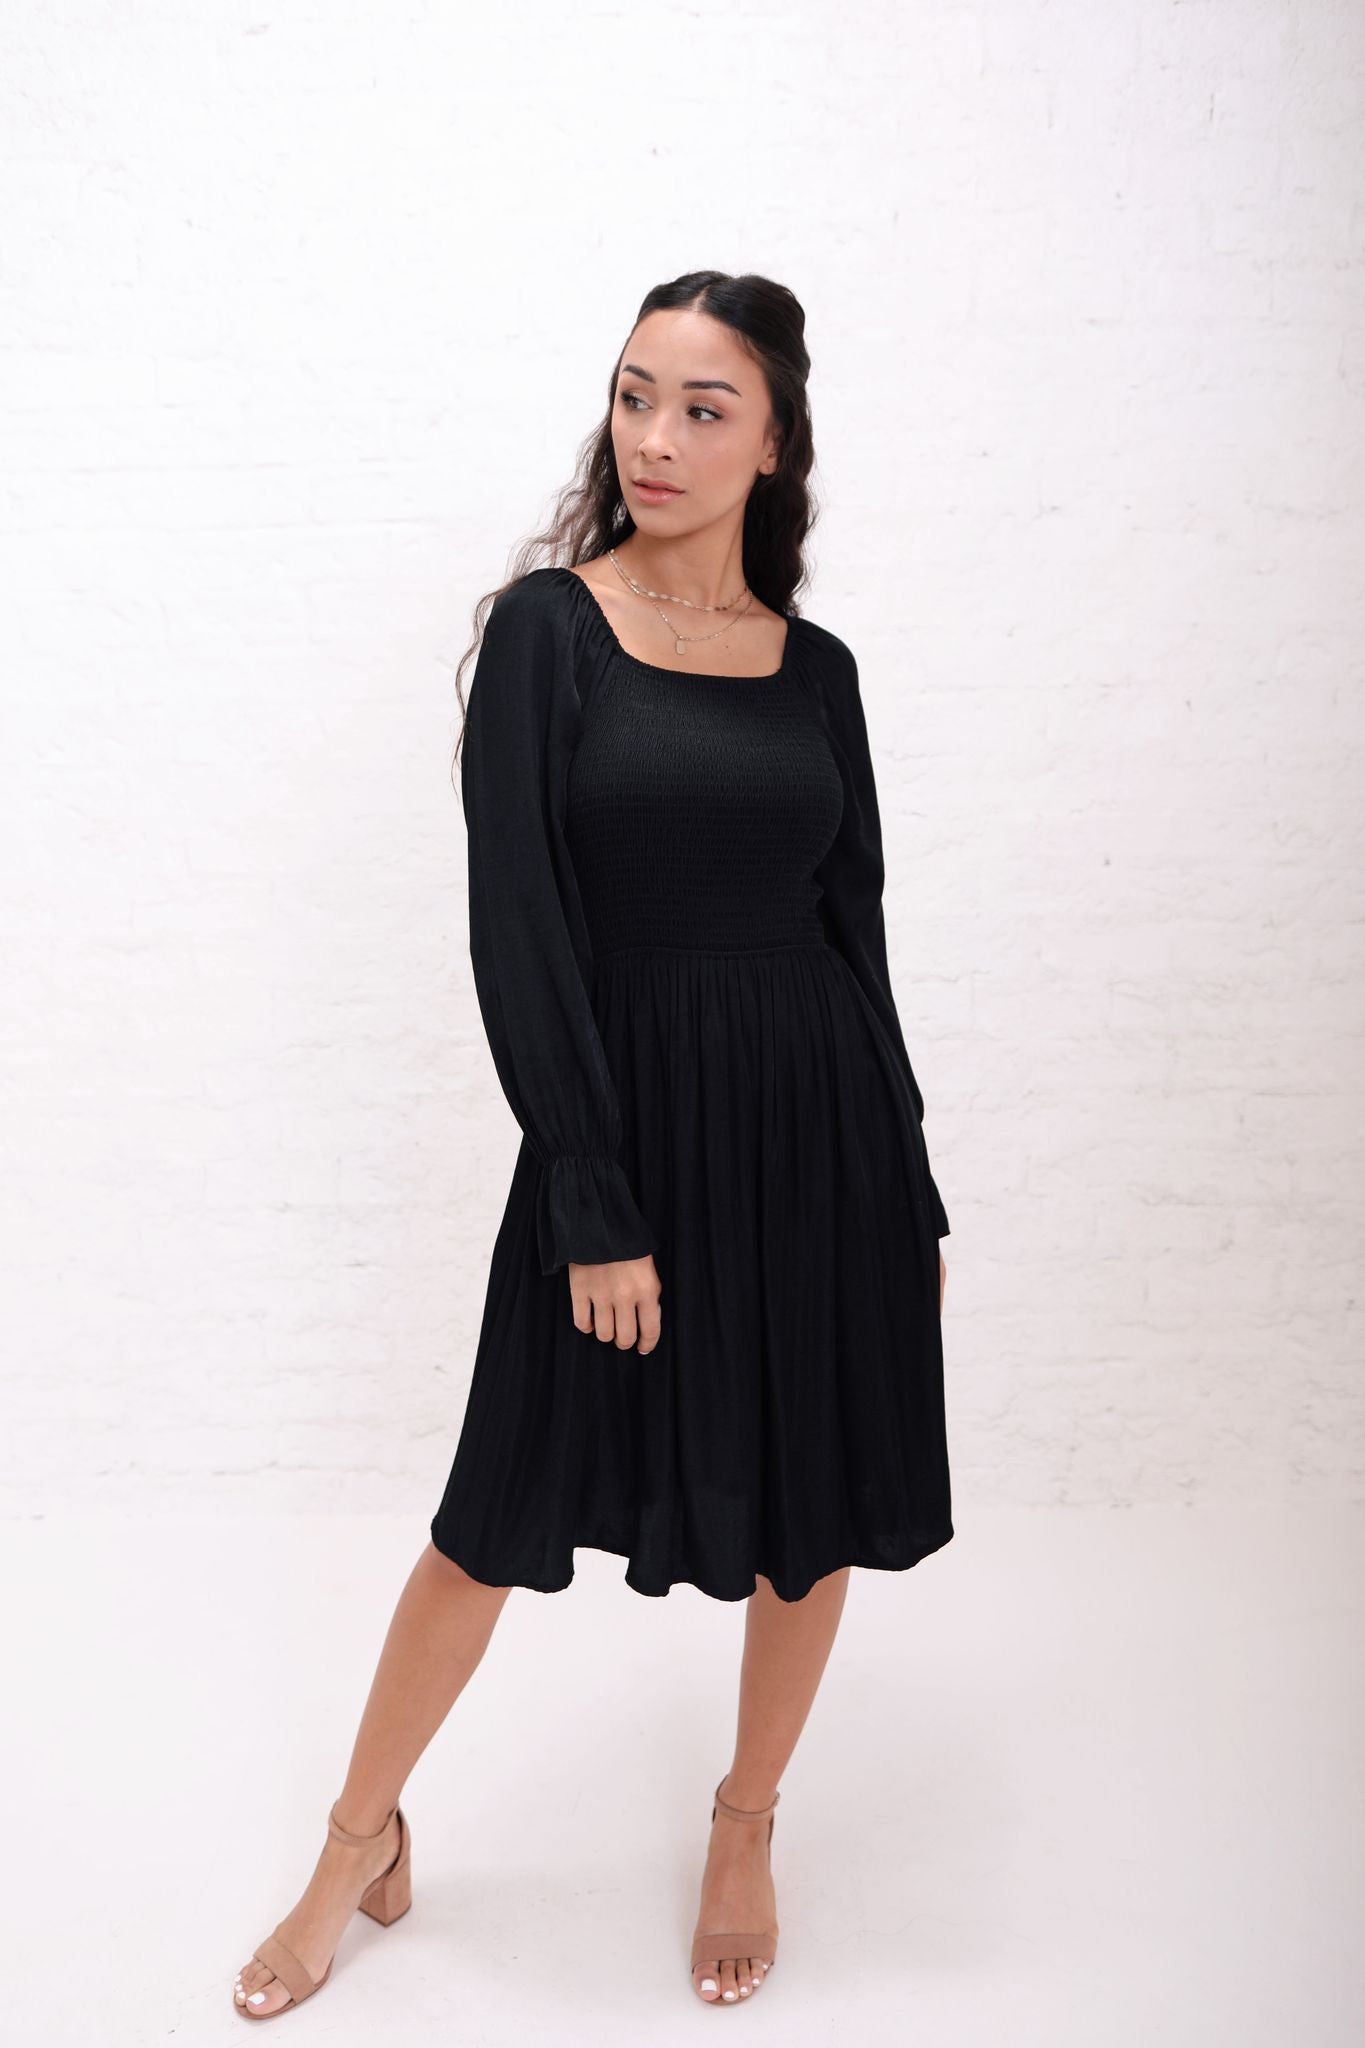 modest black dress